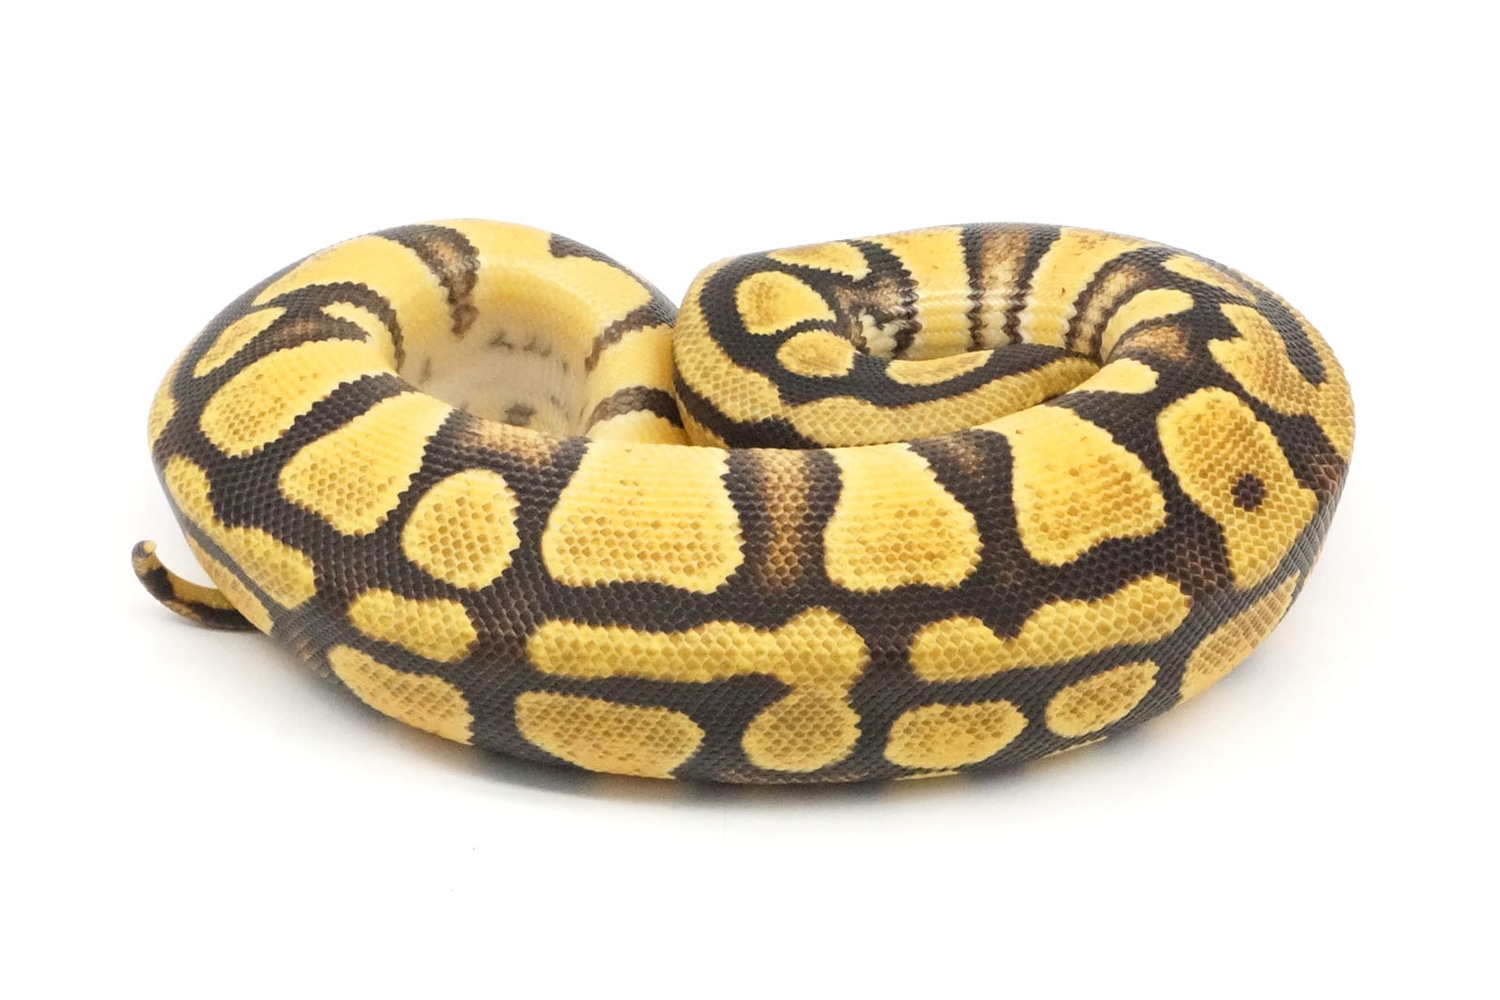 Pastel EMG Enchi Ball Python by New England Reptile Distributors 1